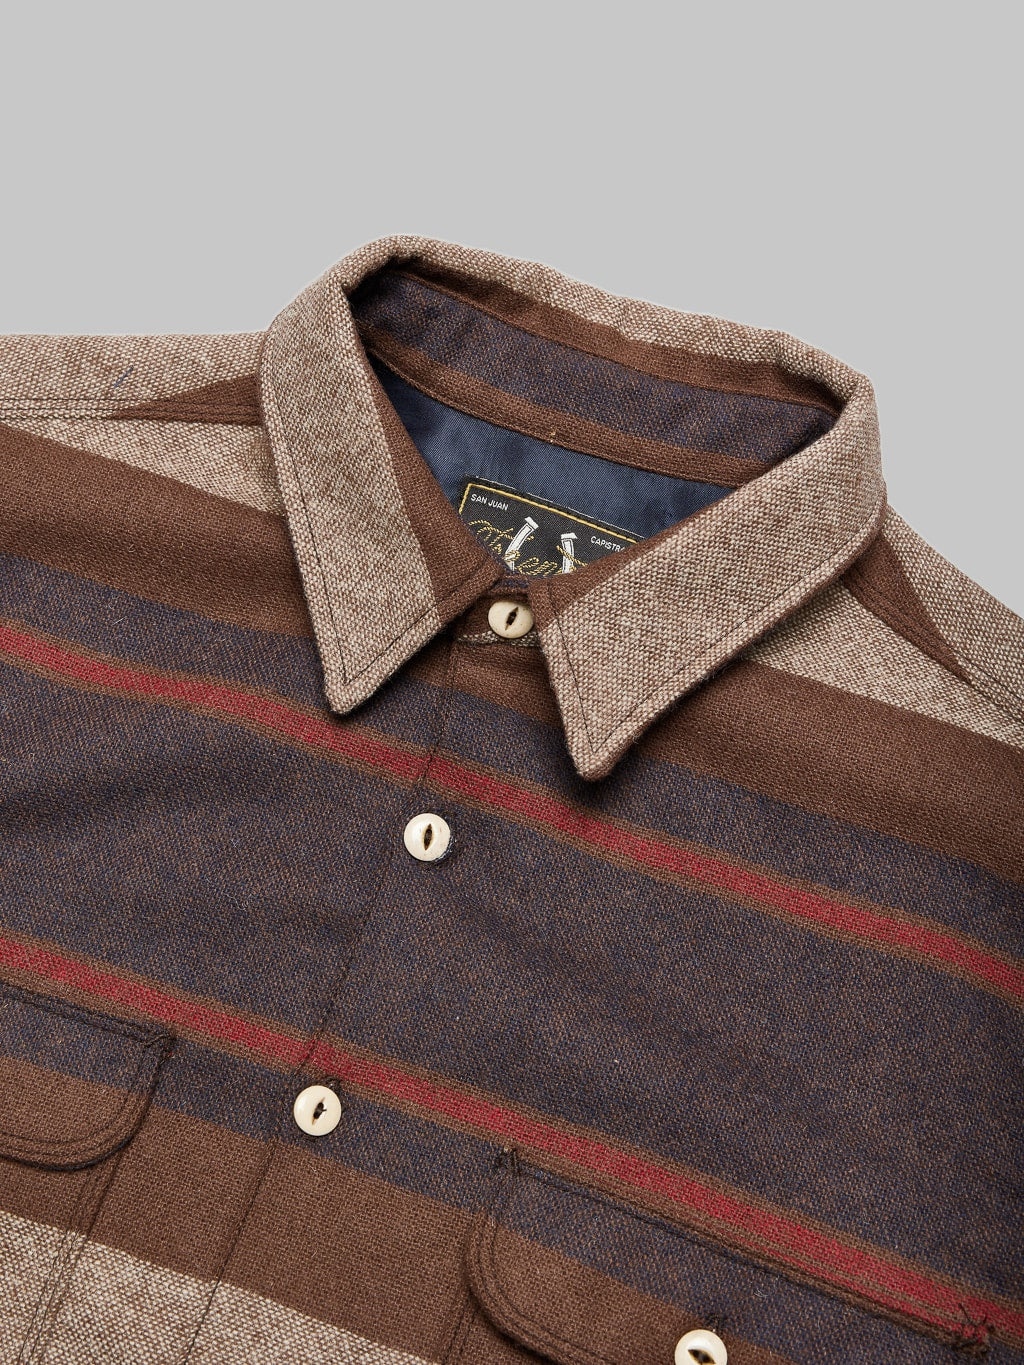 freenote cloth benson brown stripe classic wool overshirt  collar detail